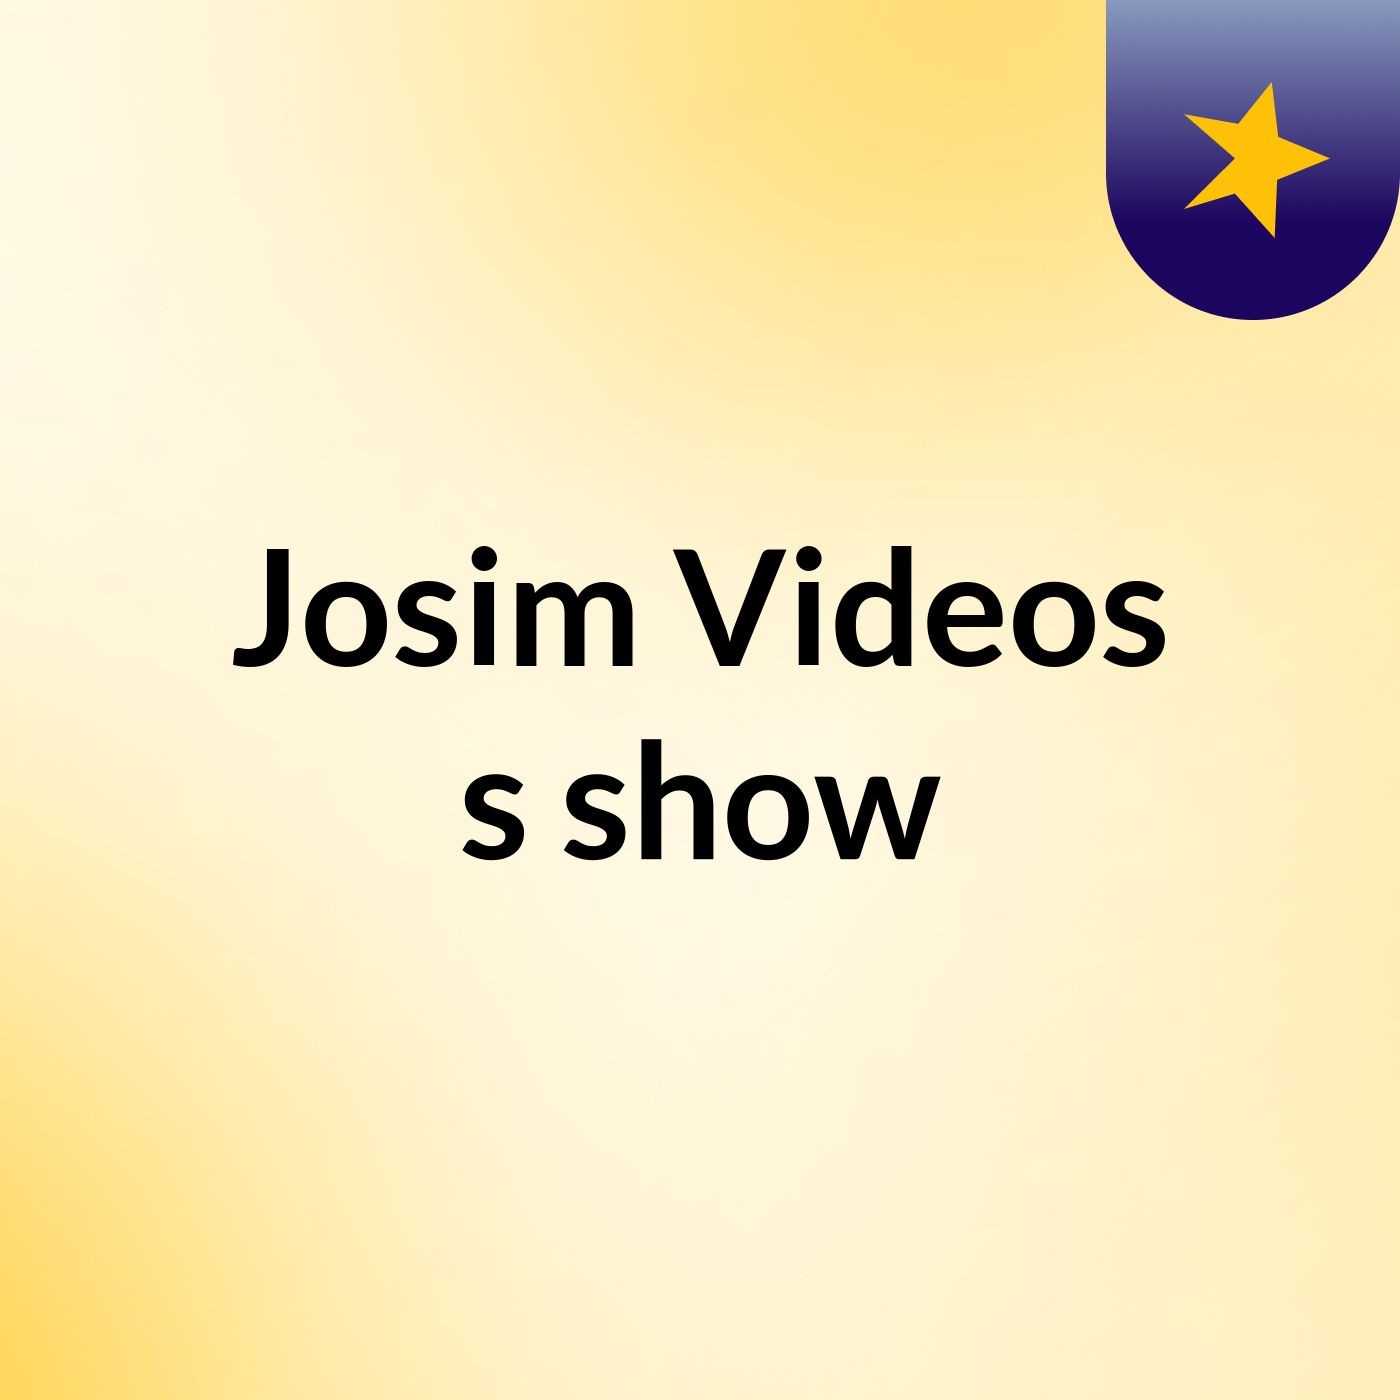 Josim Videos's show